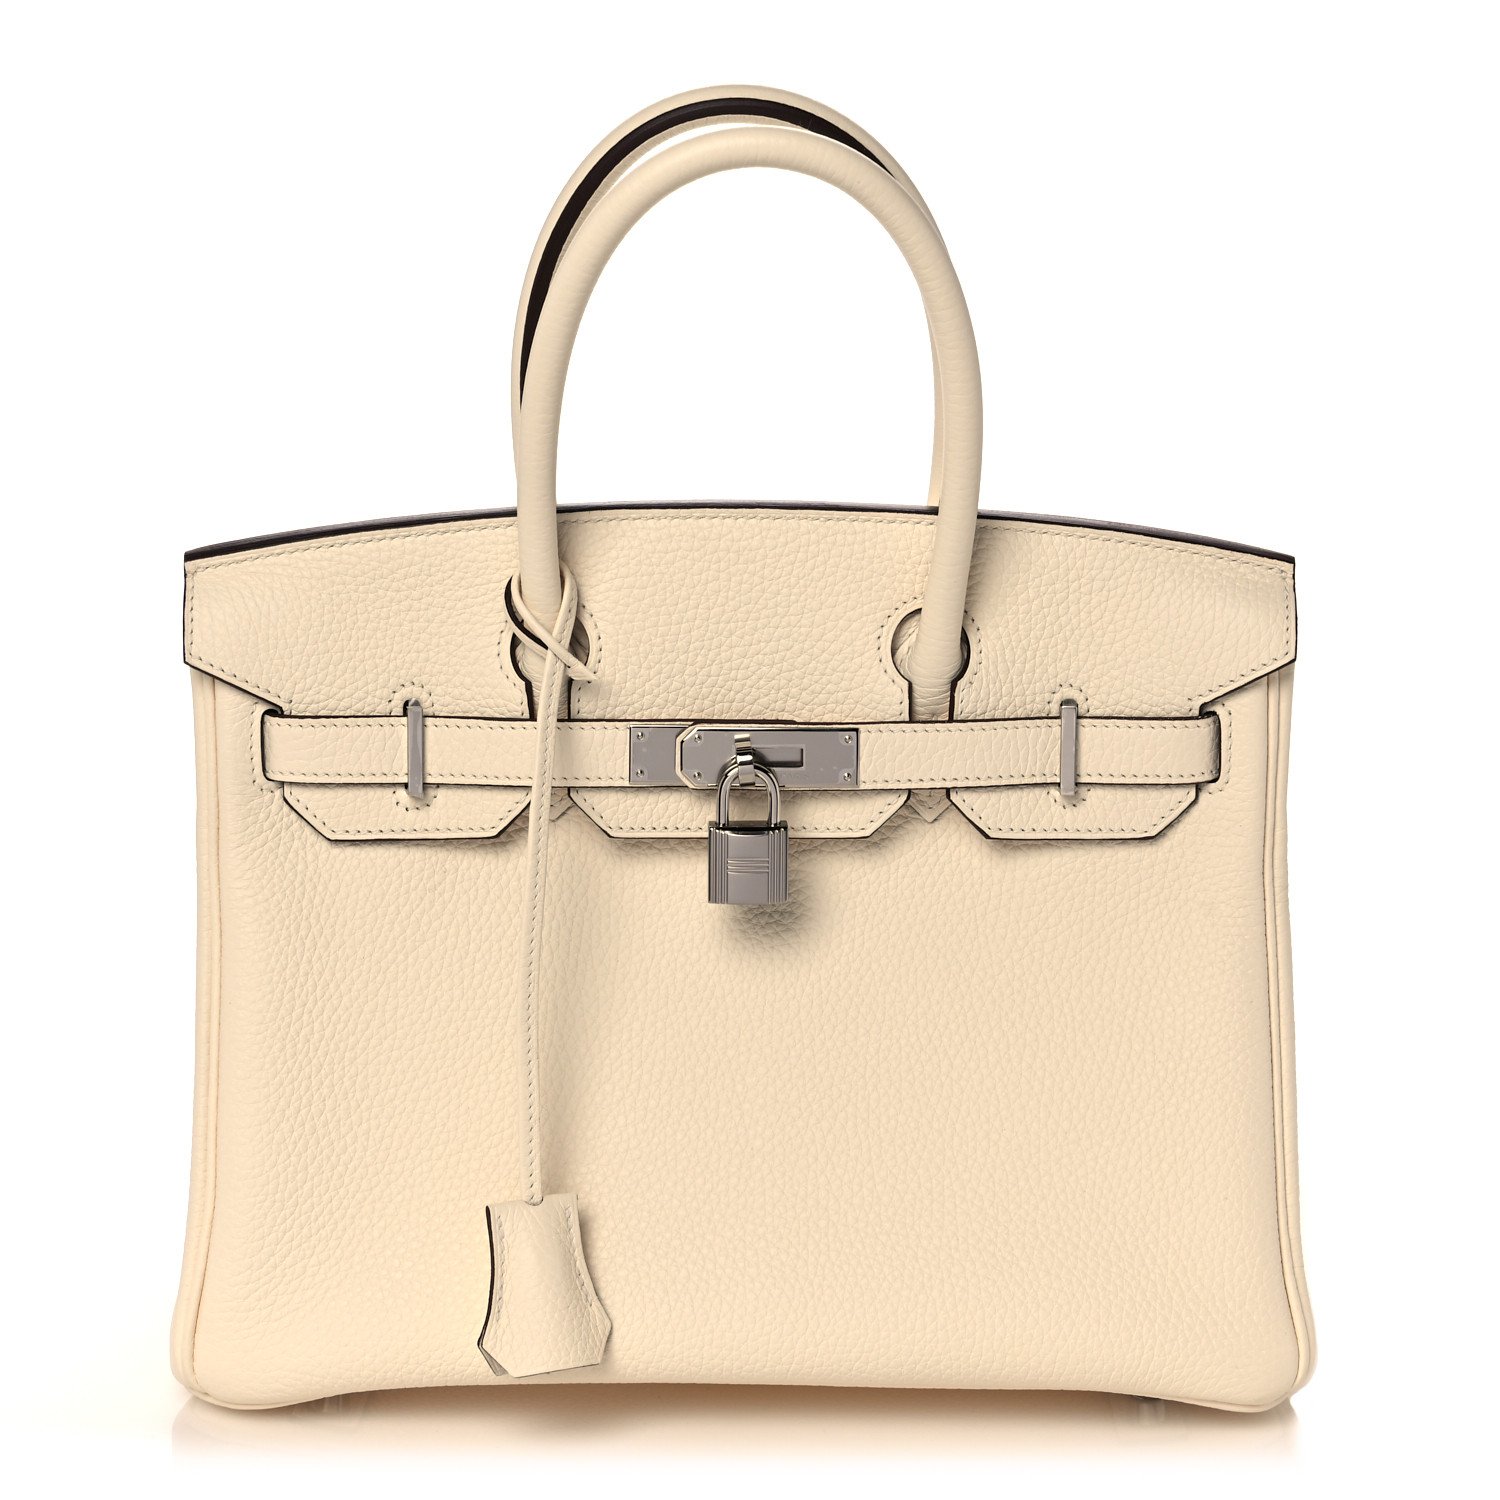 MSCHF's ultra tiny louis vuitton handbag is so small it needs a